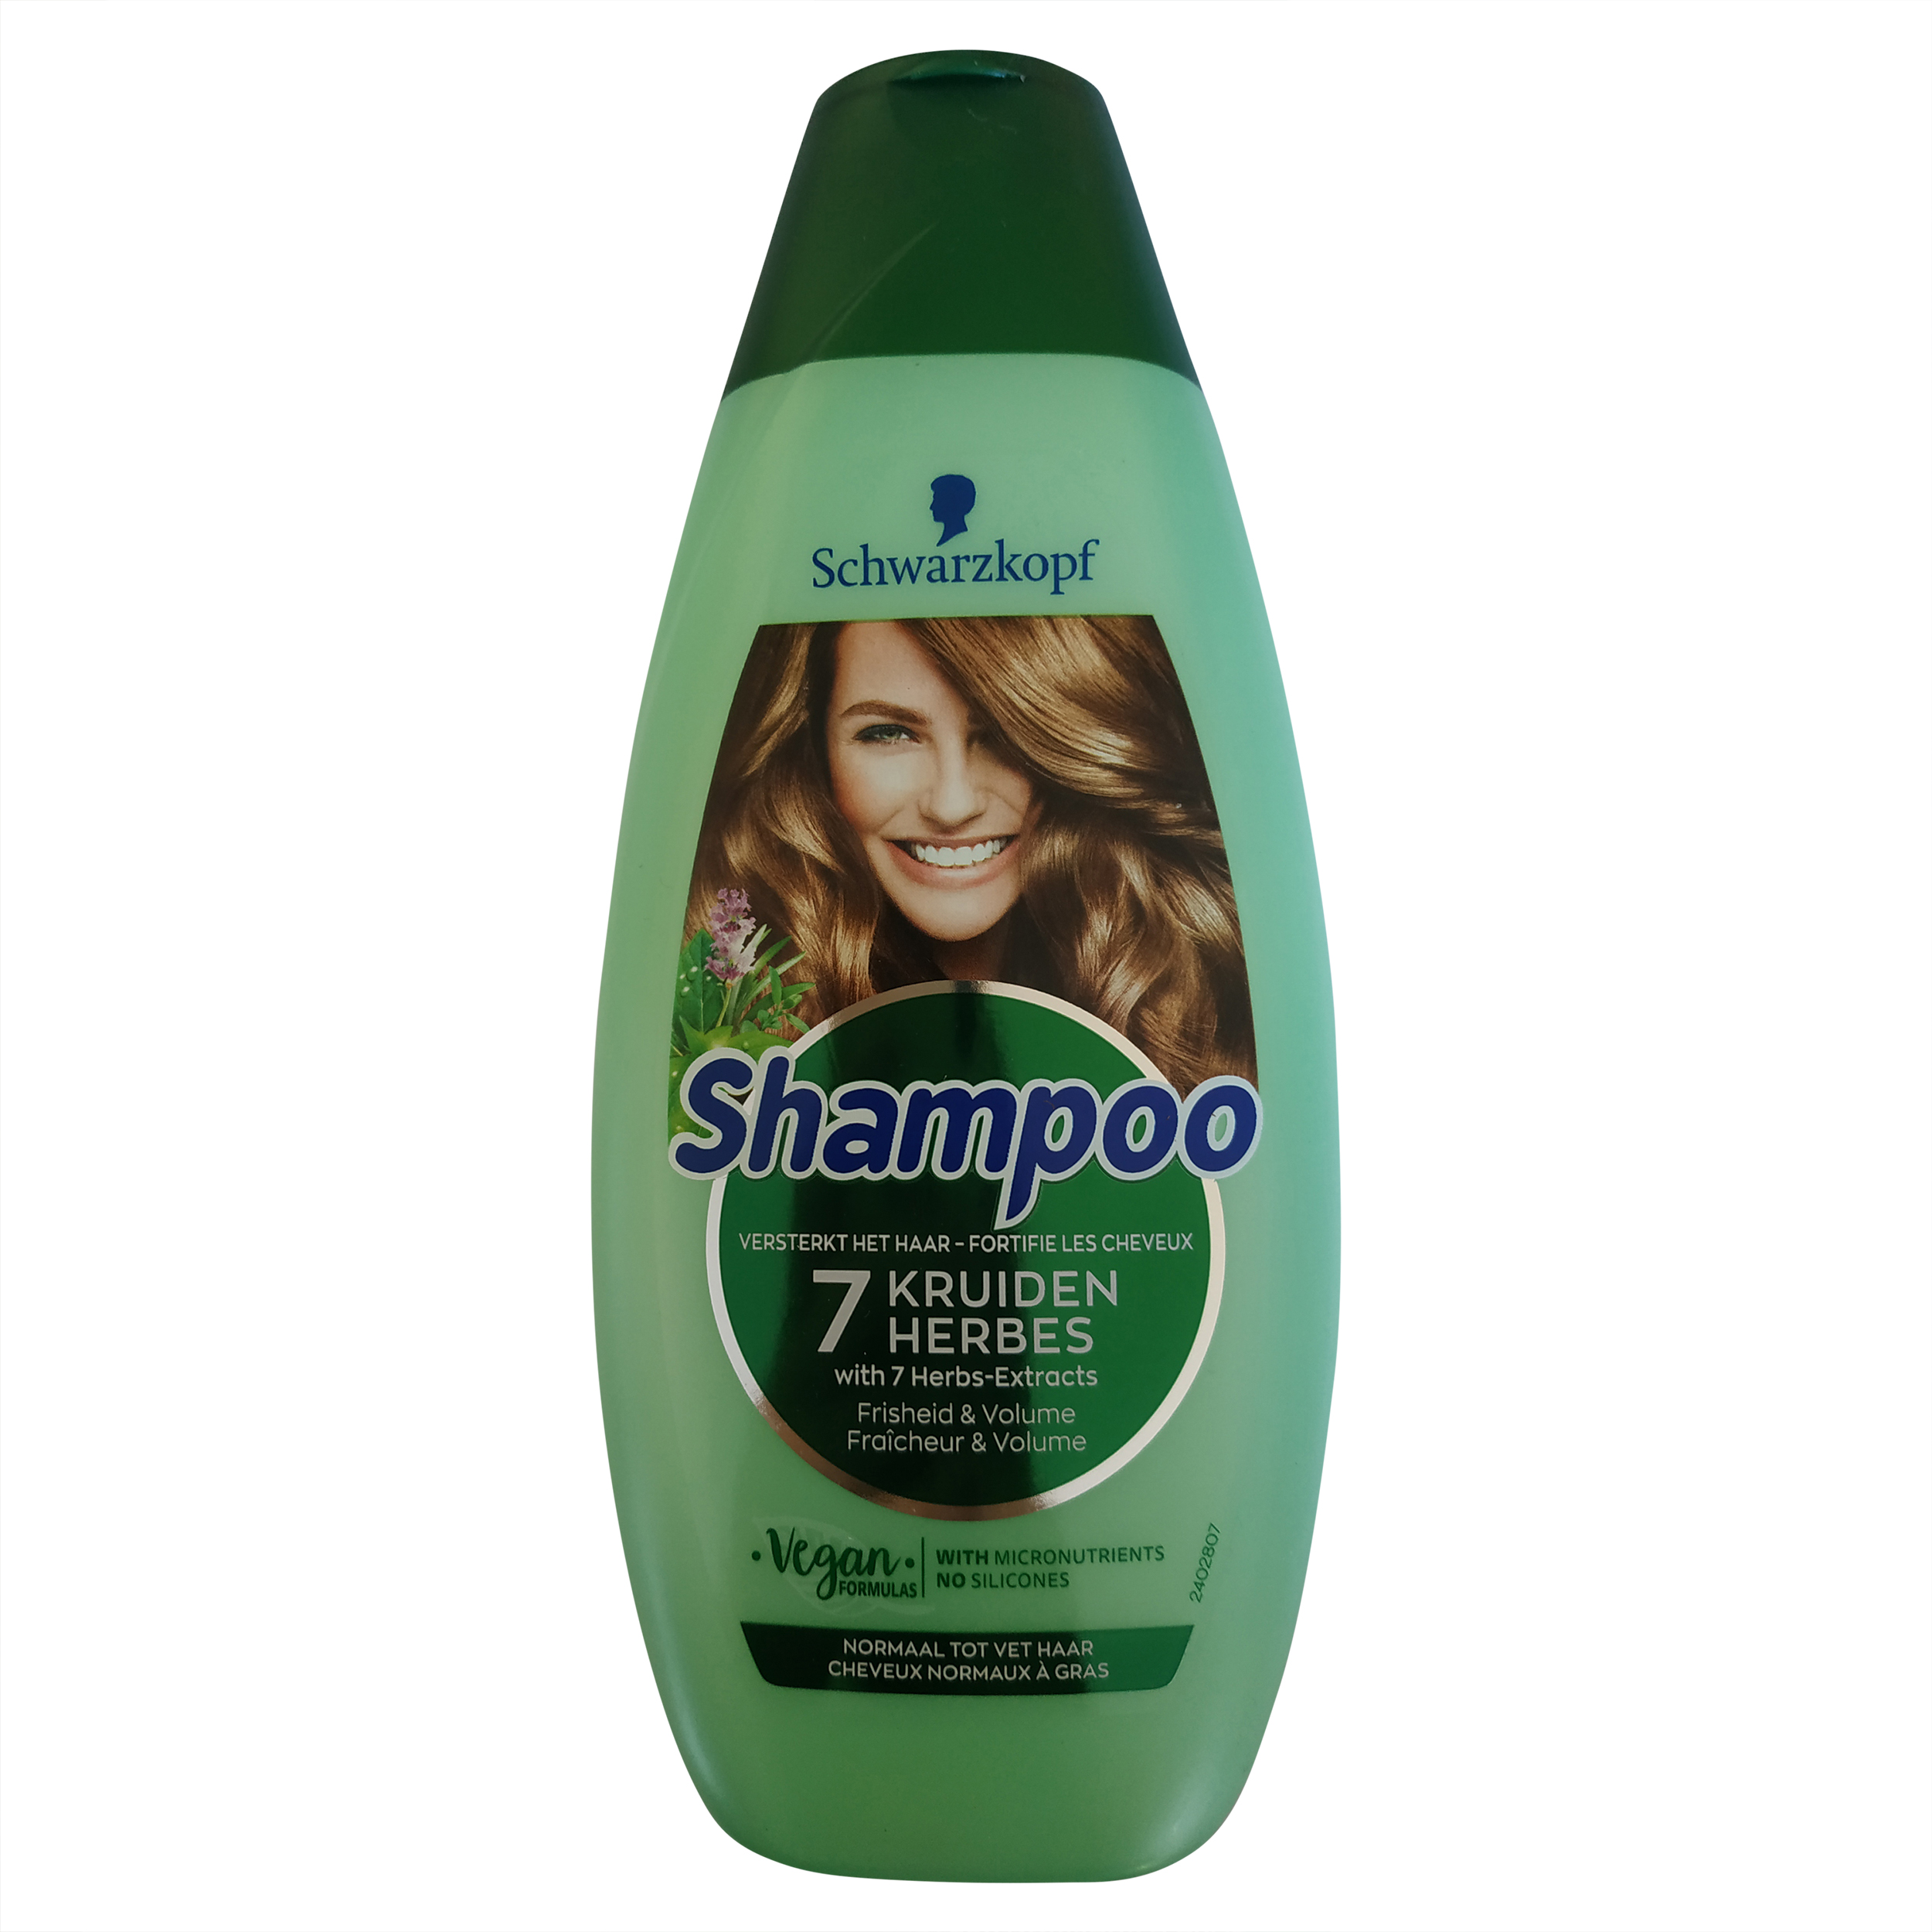 Shampoo | Schwarzkopf Products | Schwarzkopf Shampoo 7 Herbs | Shampoo Schwarzkopf | 14.1 Ounce Total Weight World of Europe